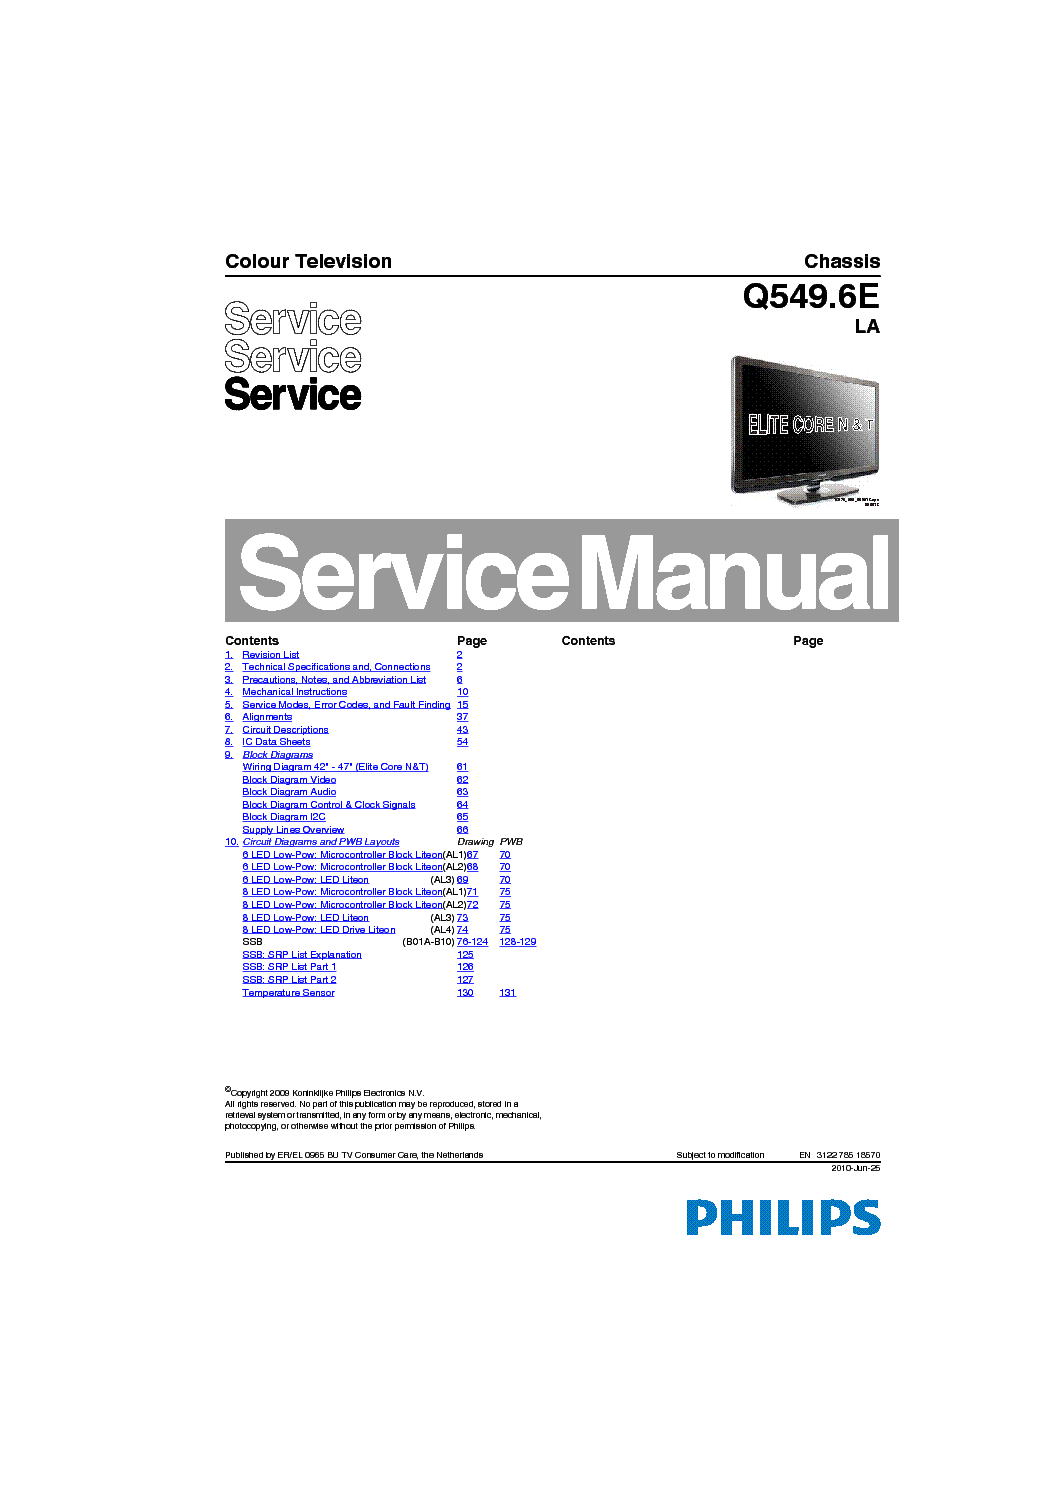 PHILIPS 47PFL9664 CHASSIS Q549.6E LA service manual (1st page)